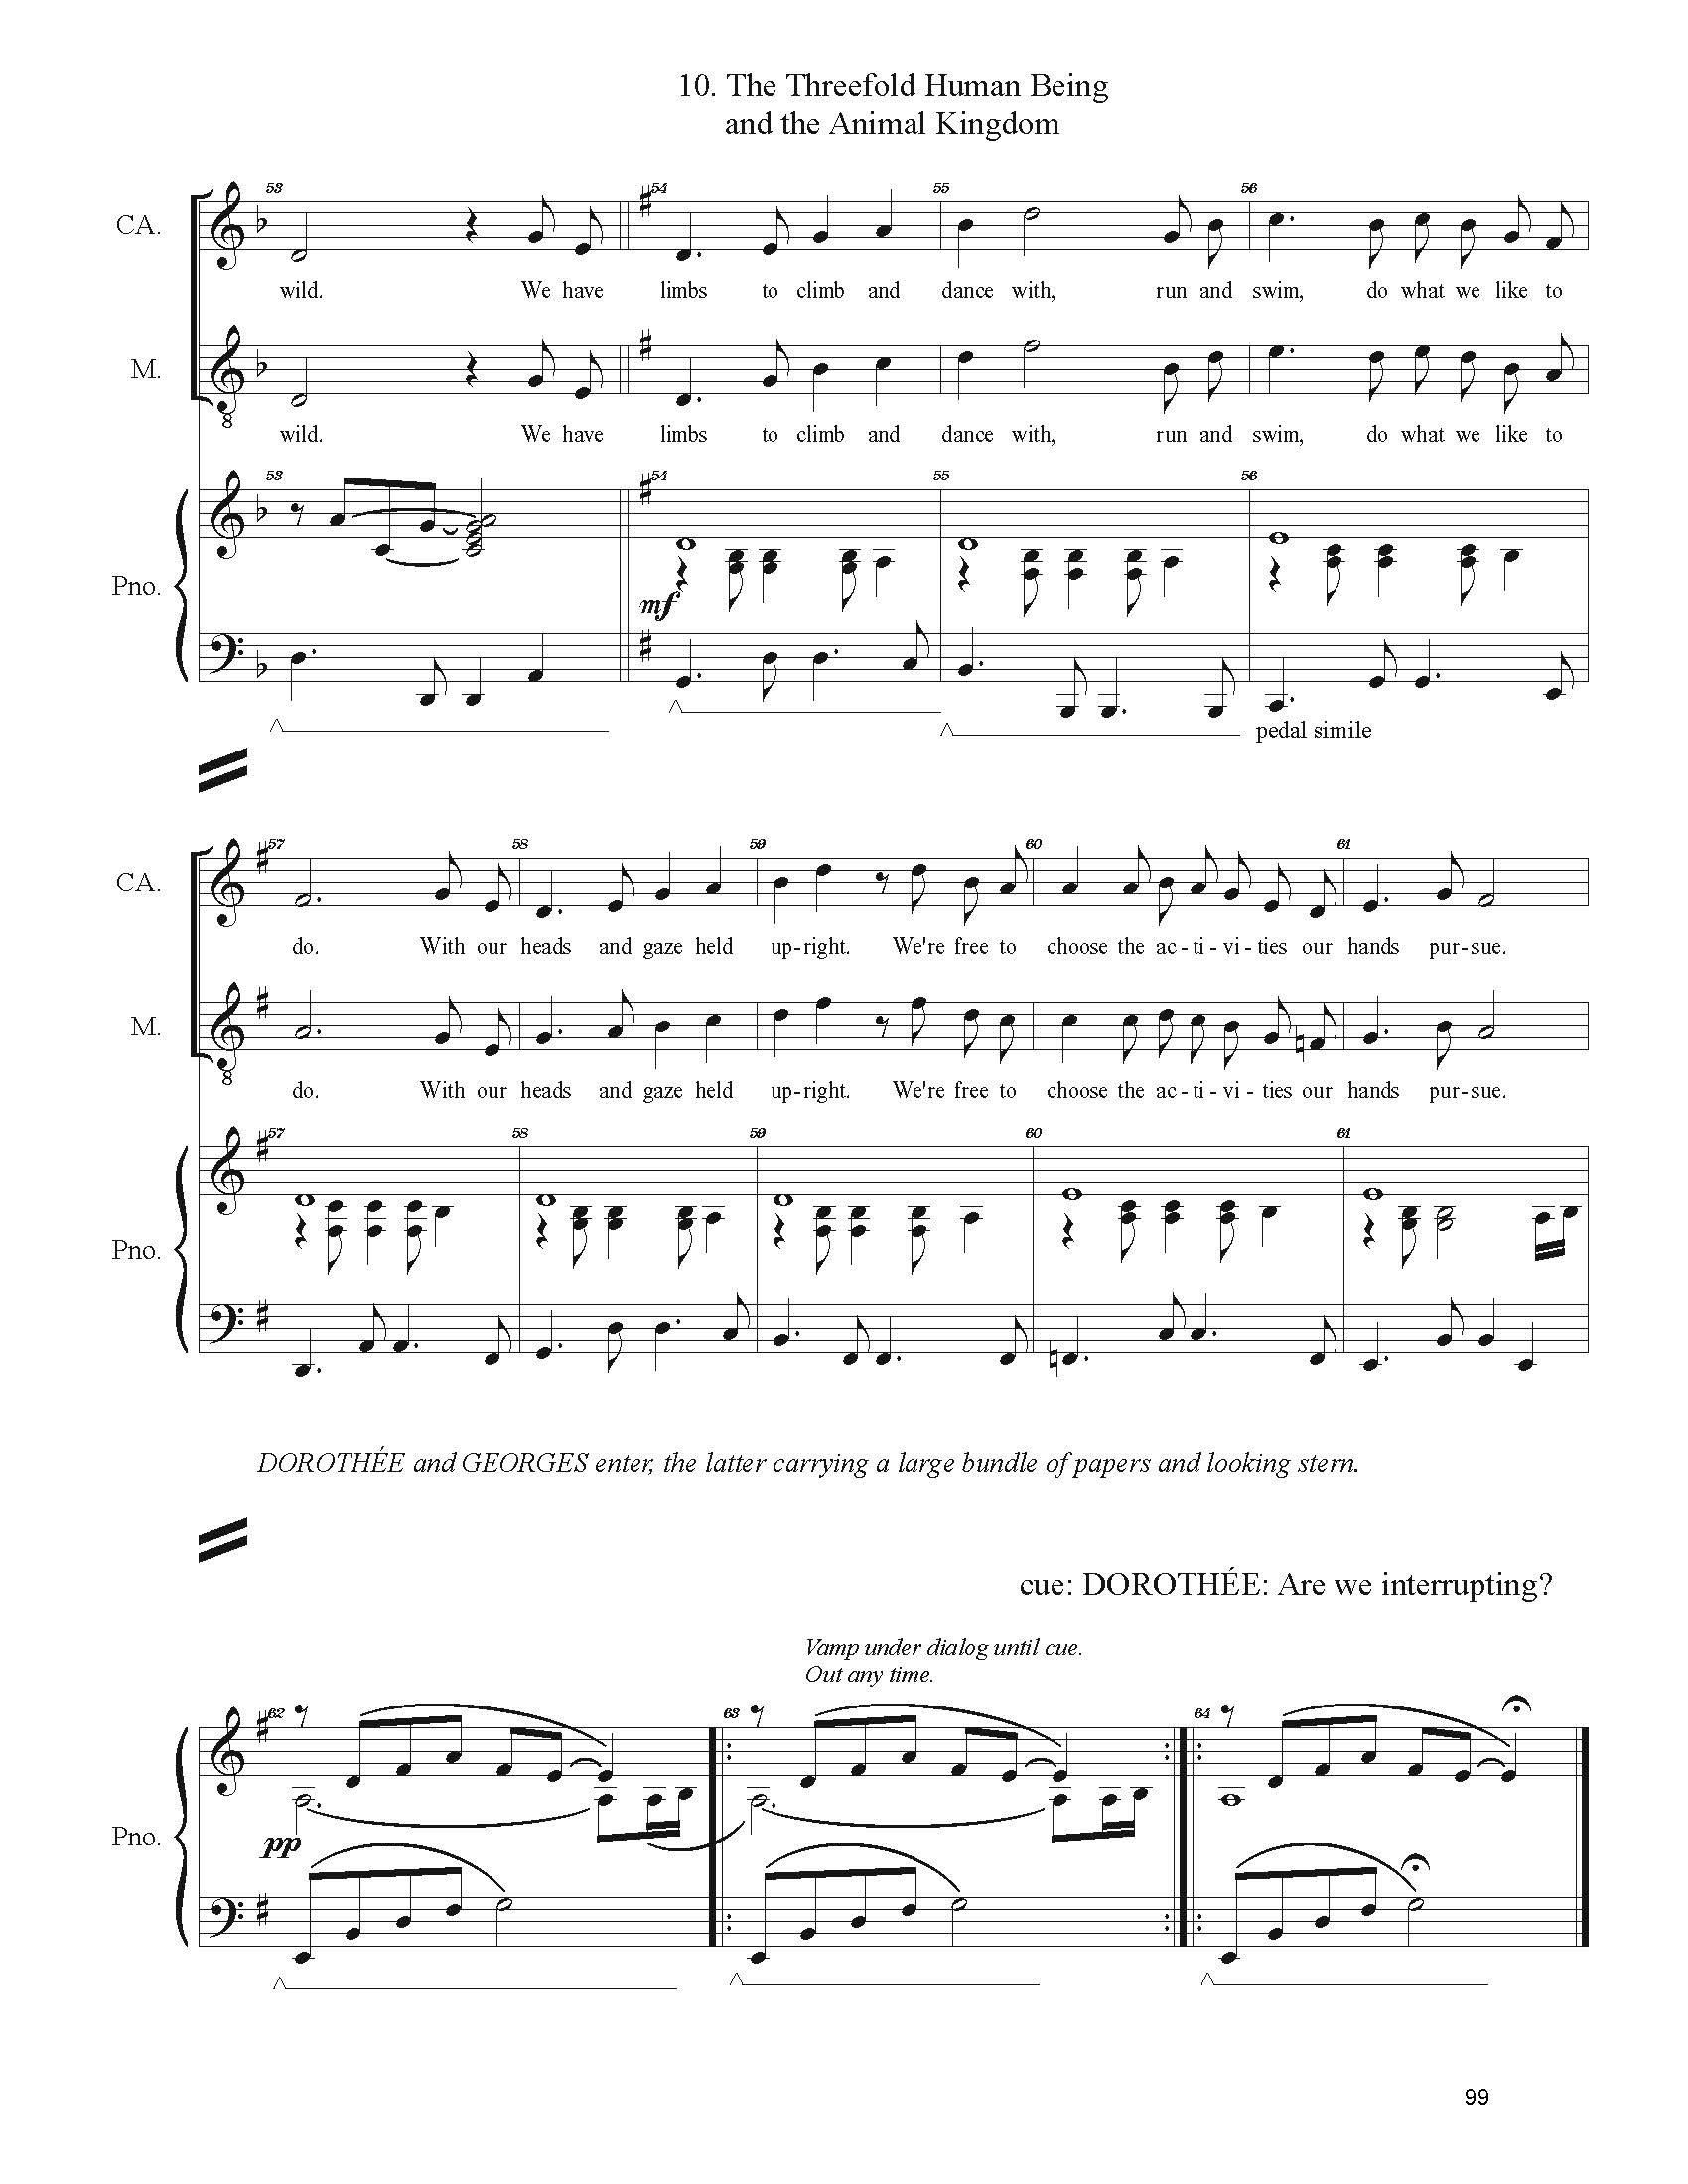 FULL PIANO VOCAL SCORE DRAFT 1 - Score_Page_099.jpg